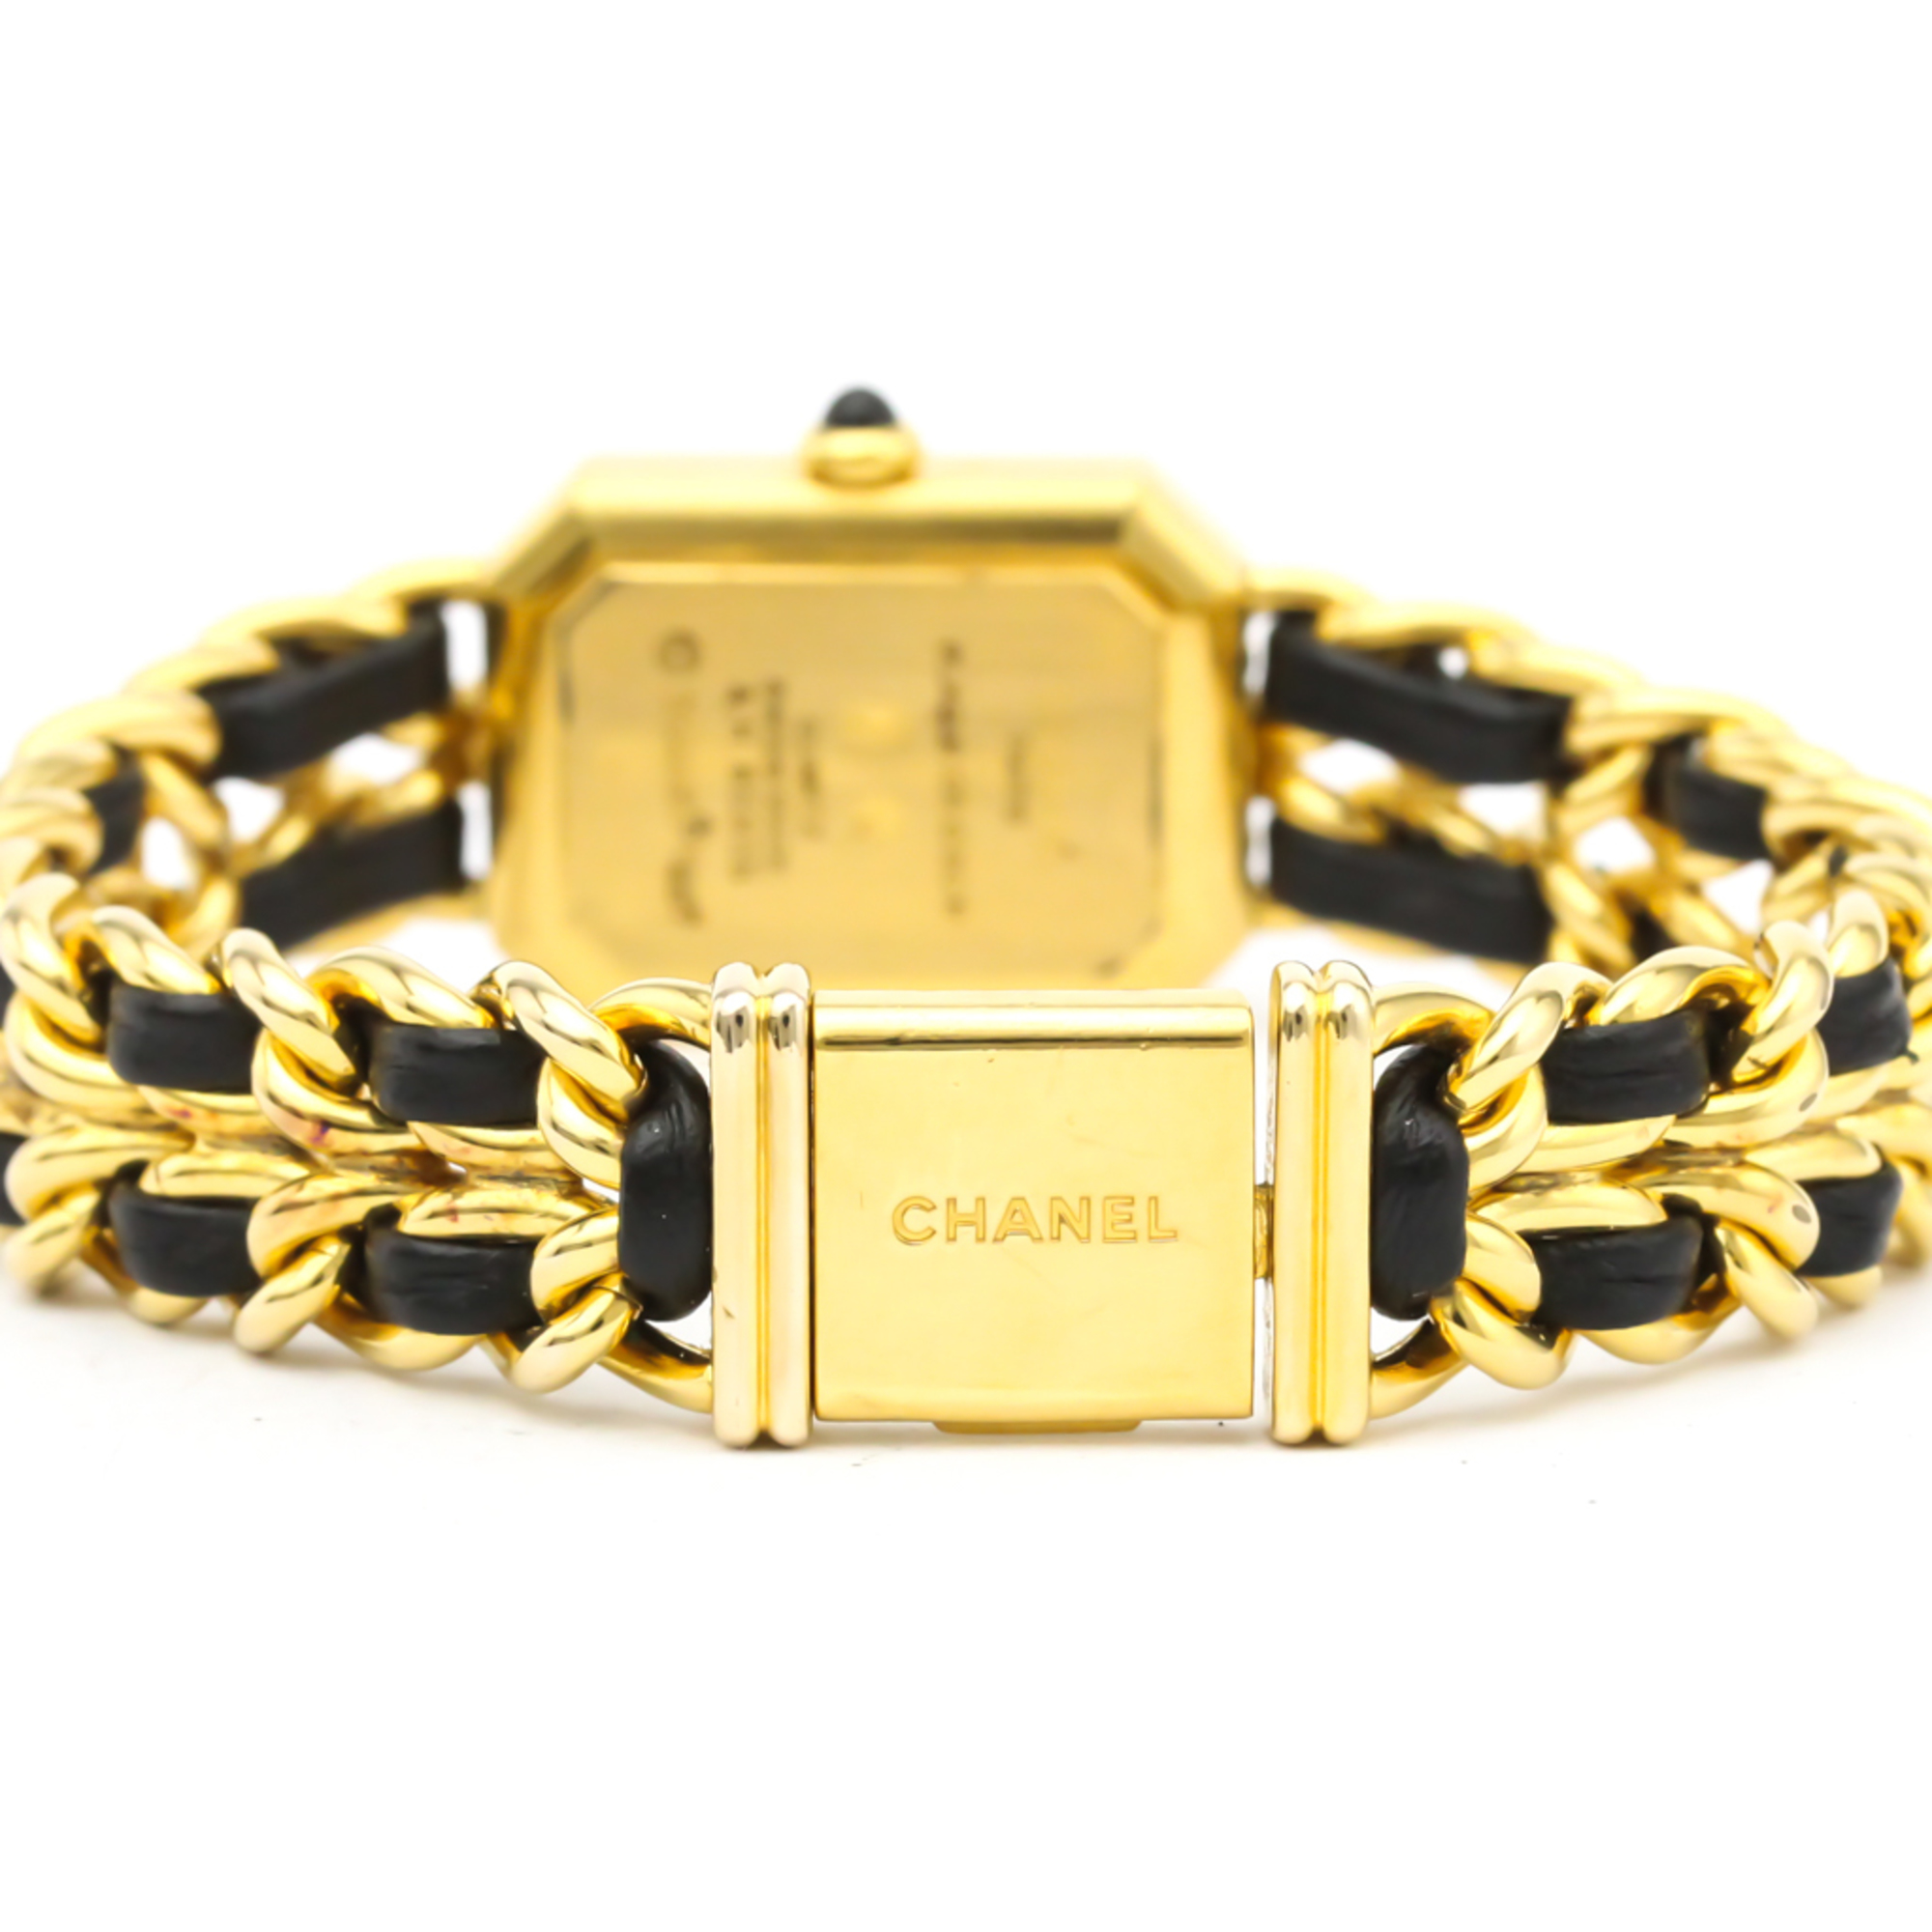 Chanel Premiere Quartz Gold Plated Women's Dress Watch H0001